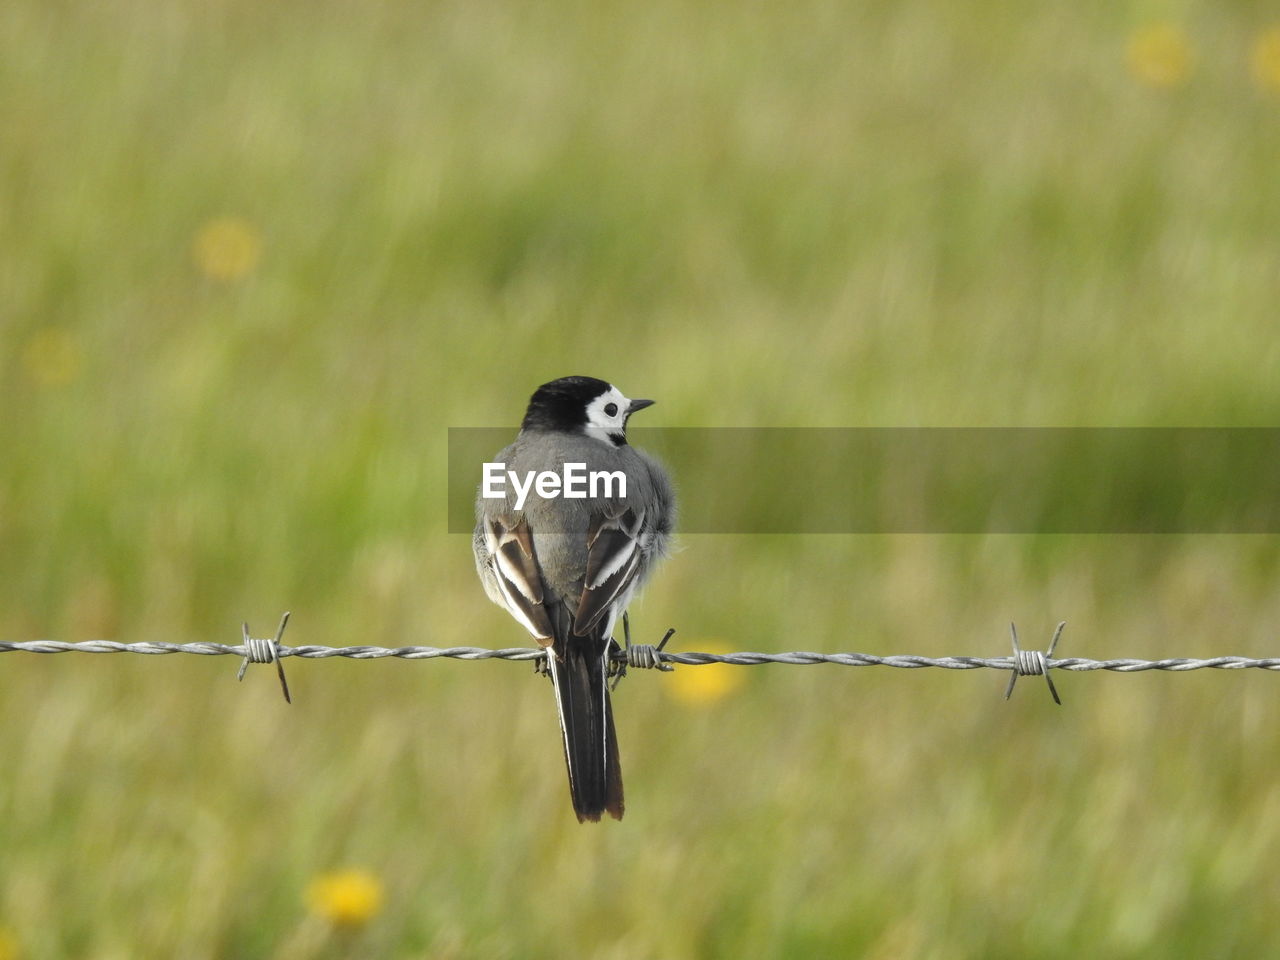 Bird perching on wire